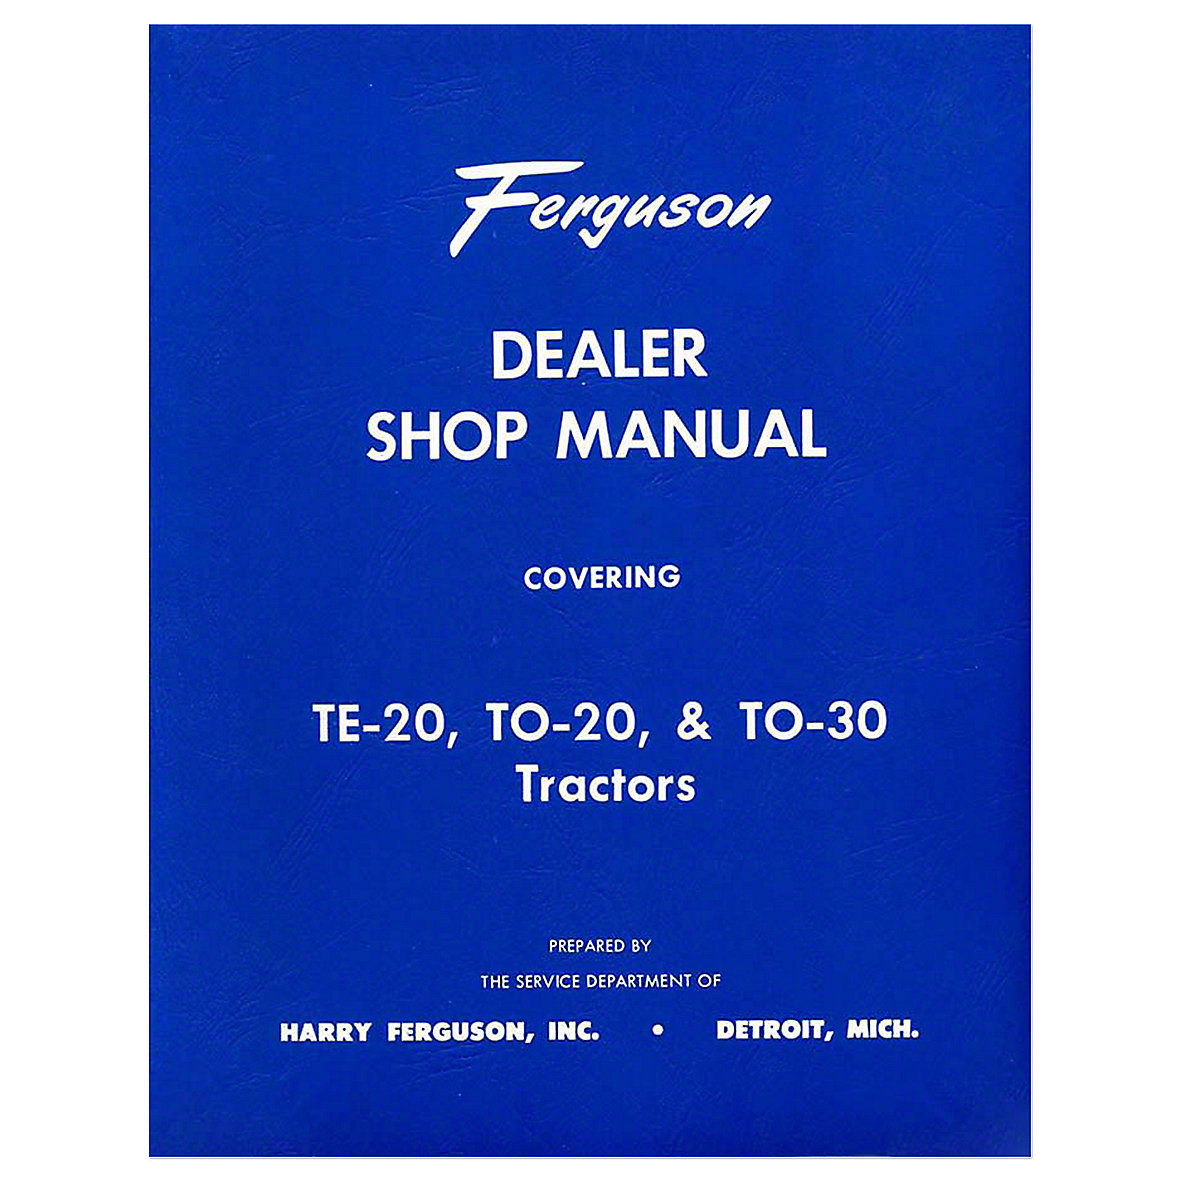 Dealer Shop Manual For Massey Ferguson TE20, TO20, TO30.